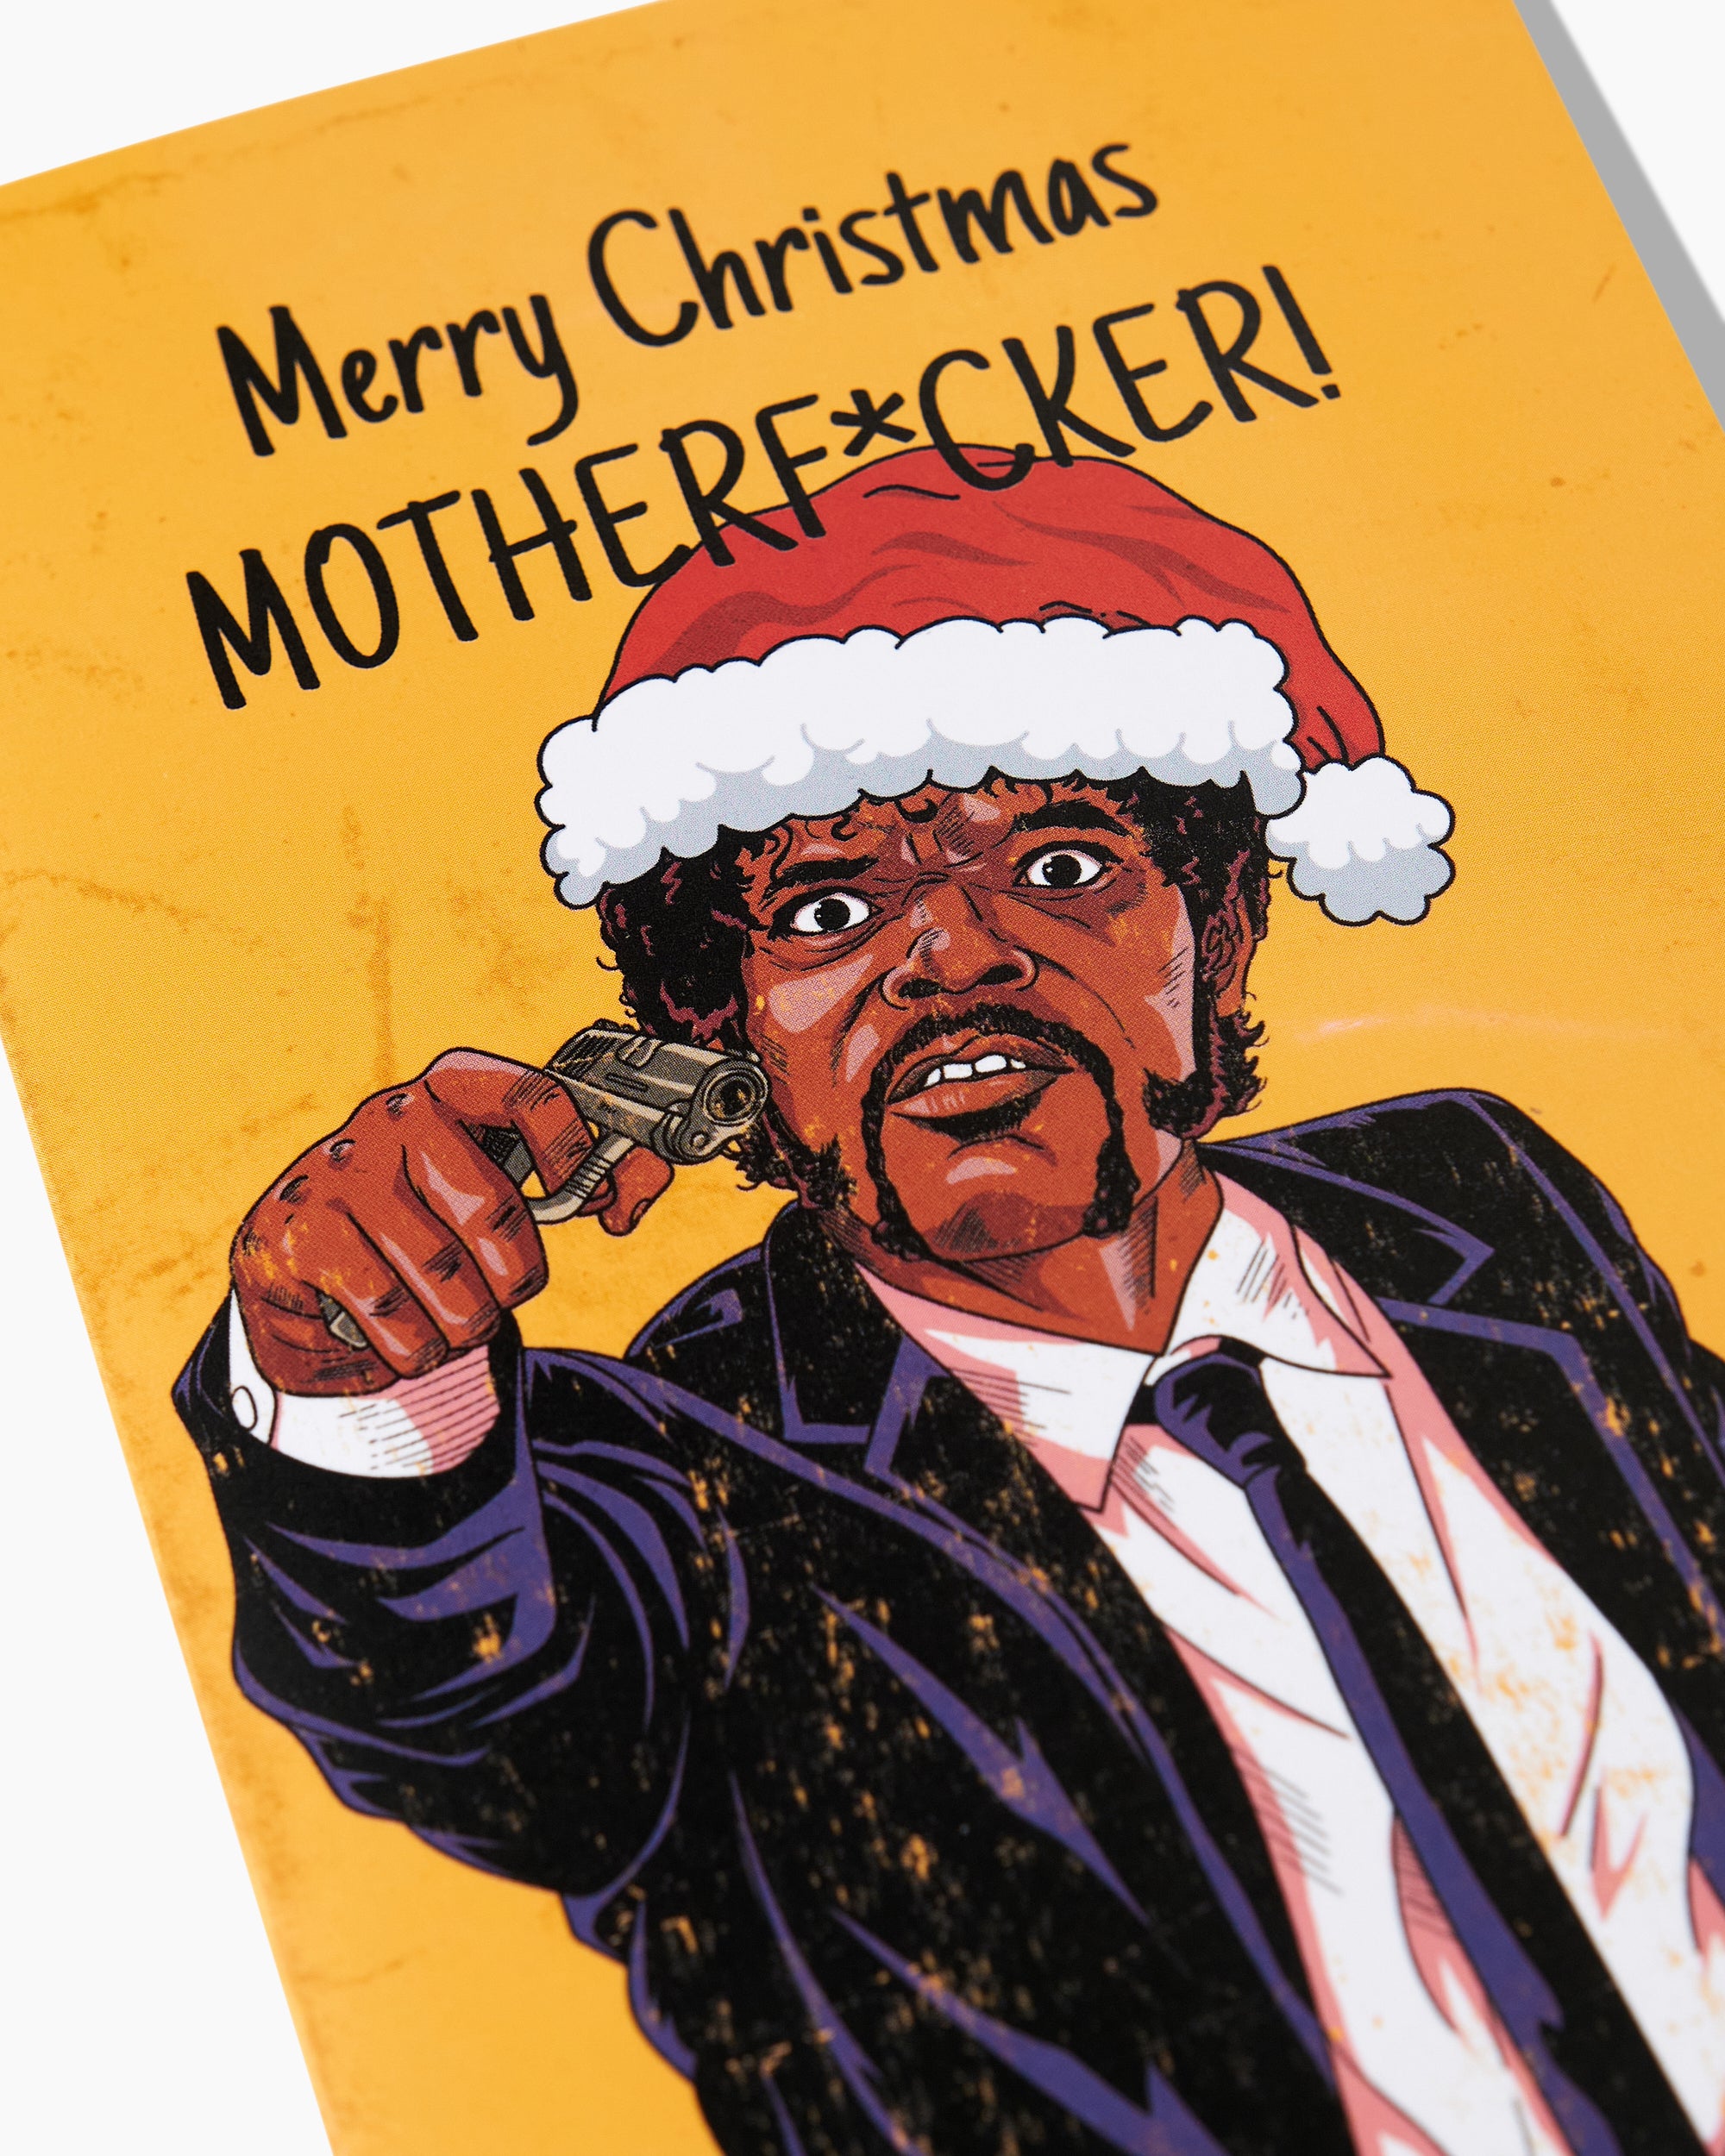 Merry Christmas Motherfucker Greeting Card Australia Online